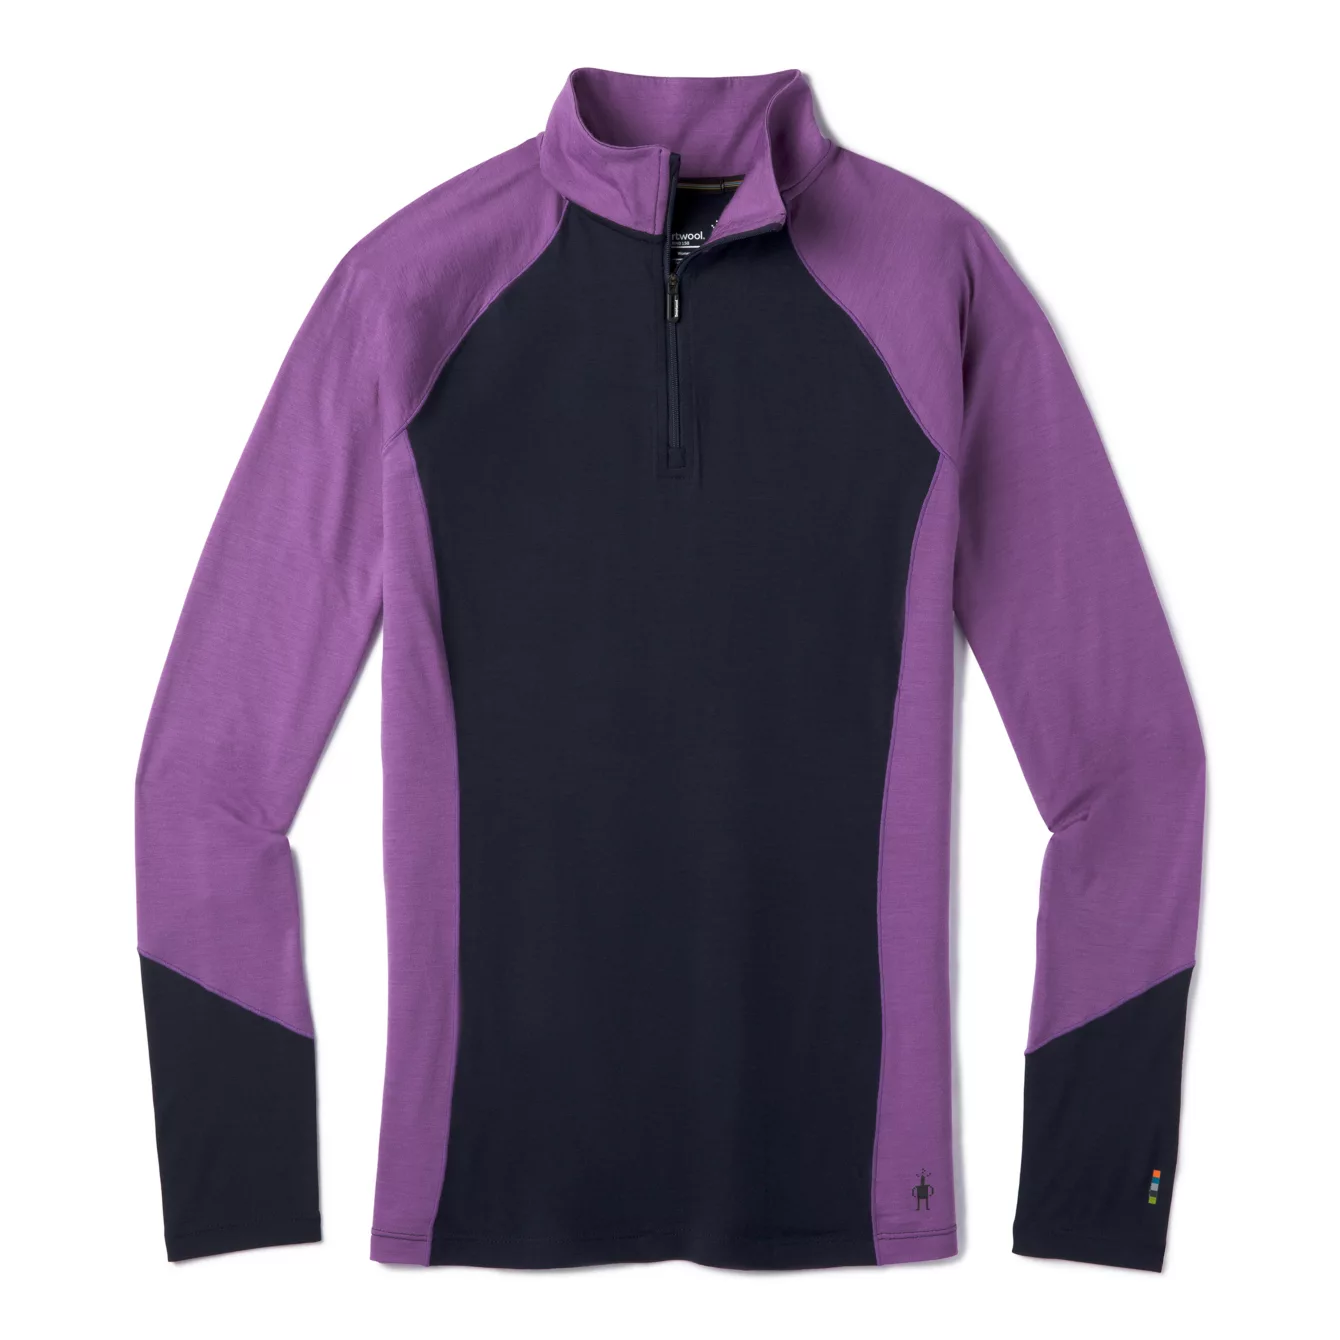 black and purple quarter-zip long sleeve top